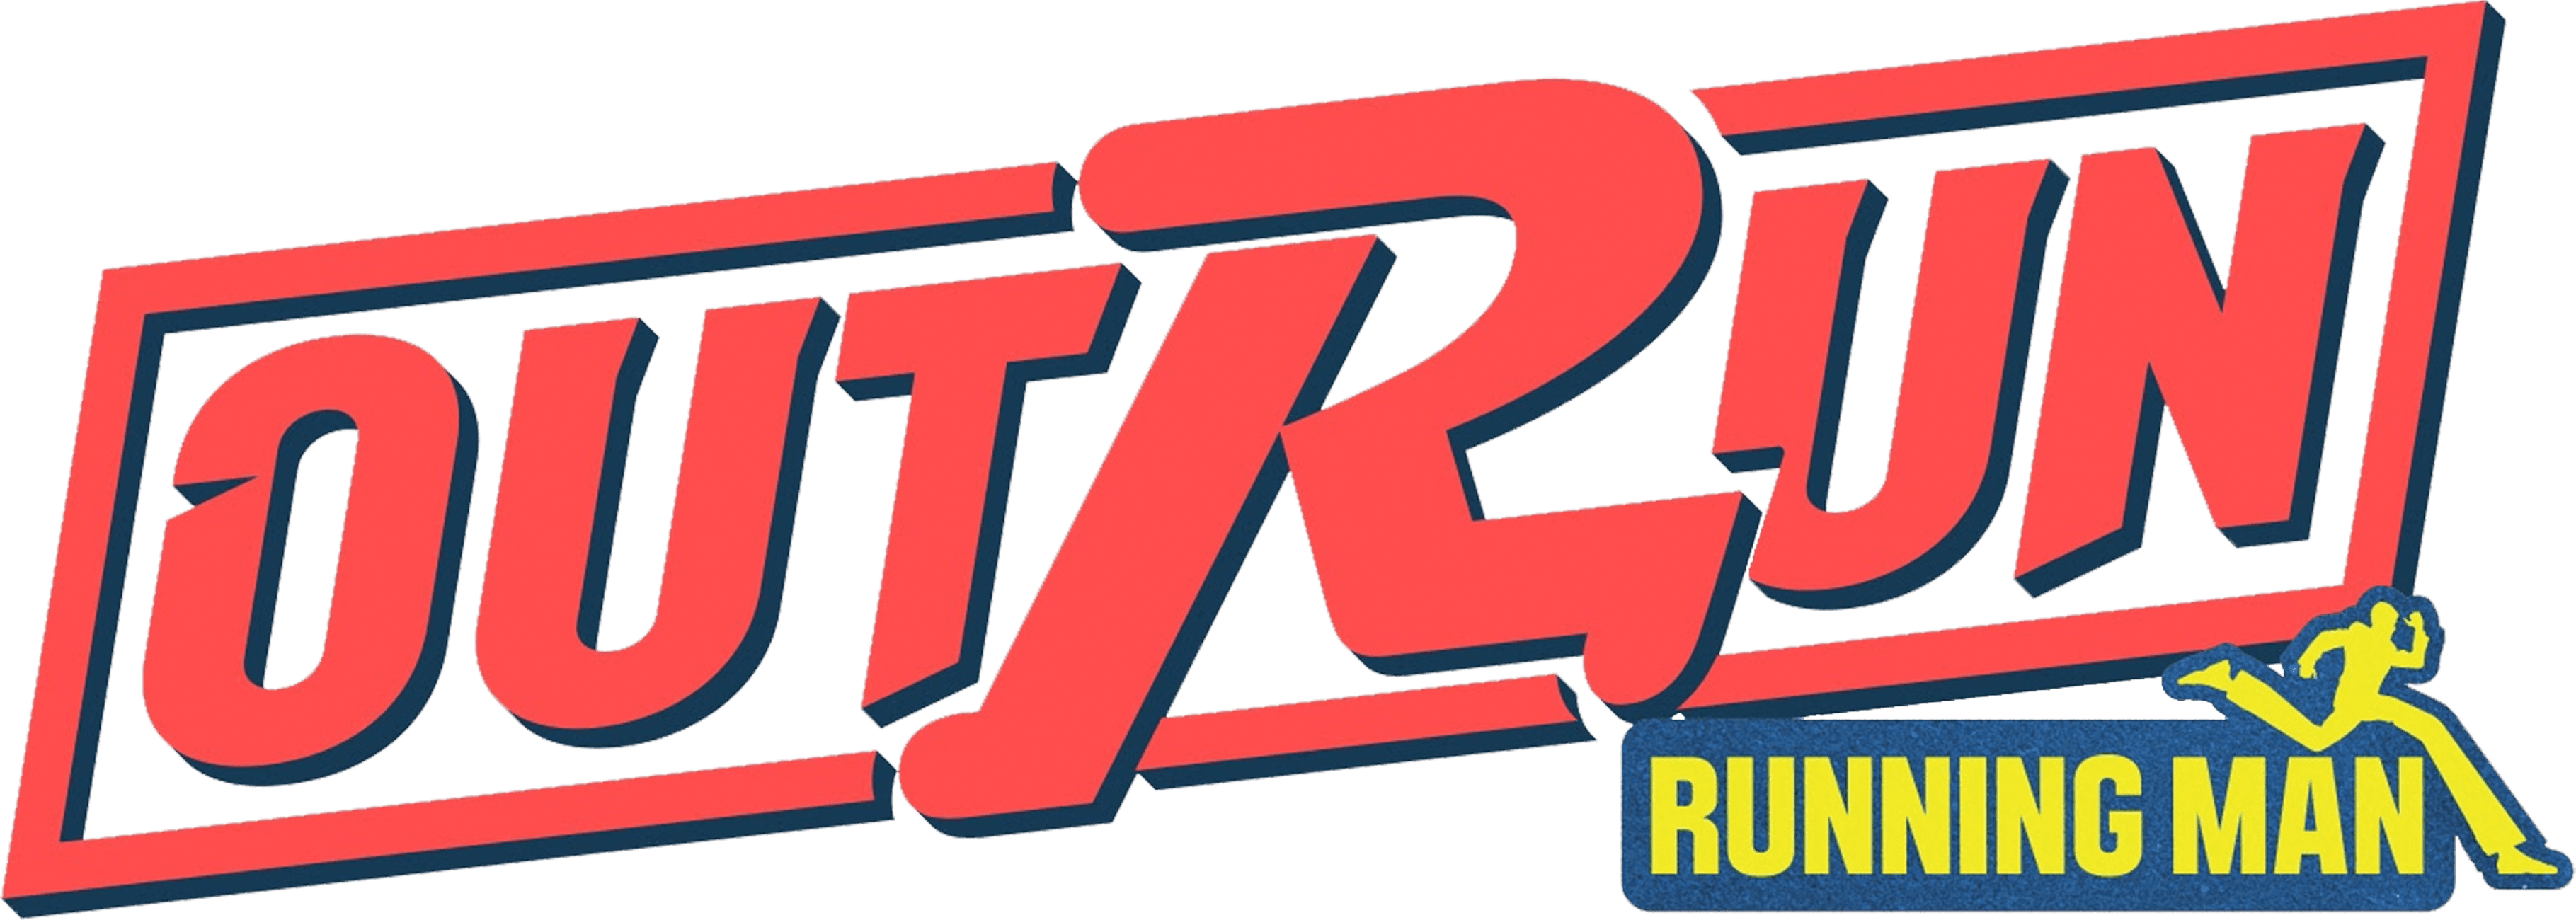 Outrun by Running Man logo